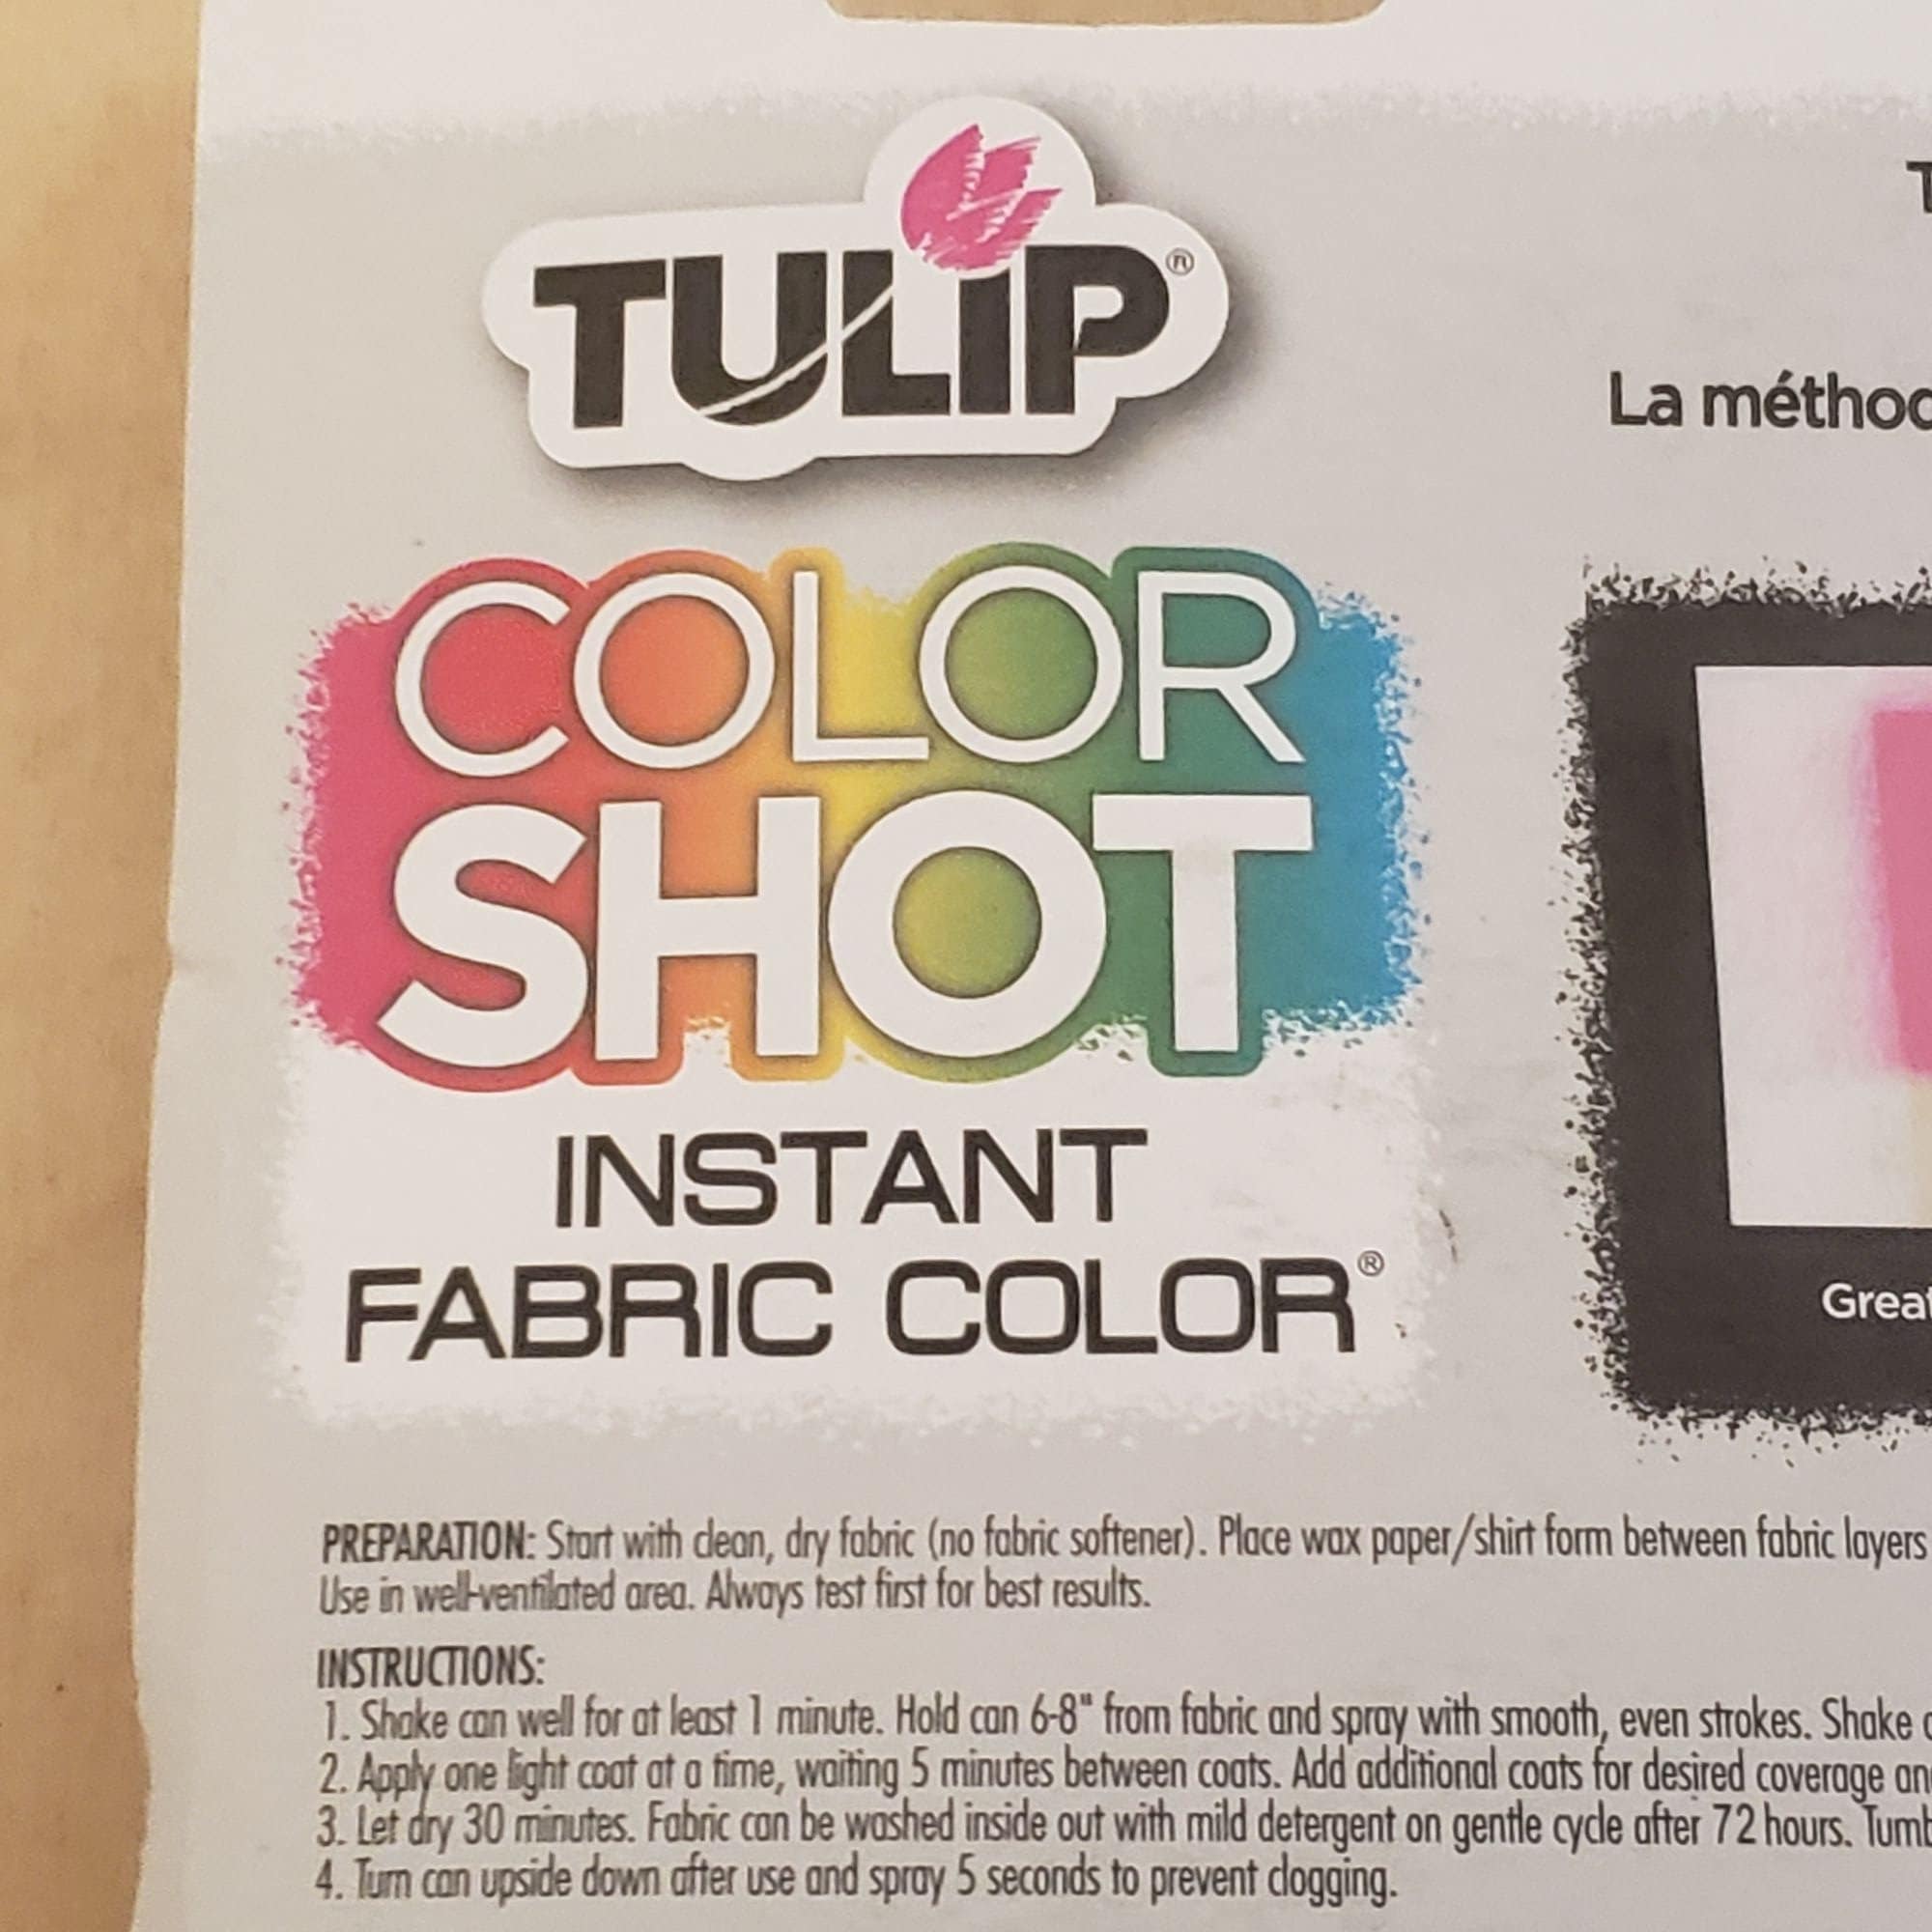 Tulip Unicorn Iridescent Colorshot Fabric Spray Paint - 3 oz